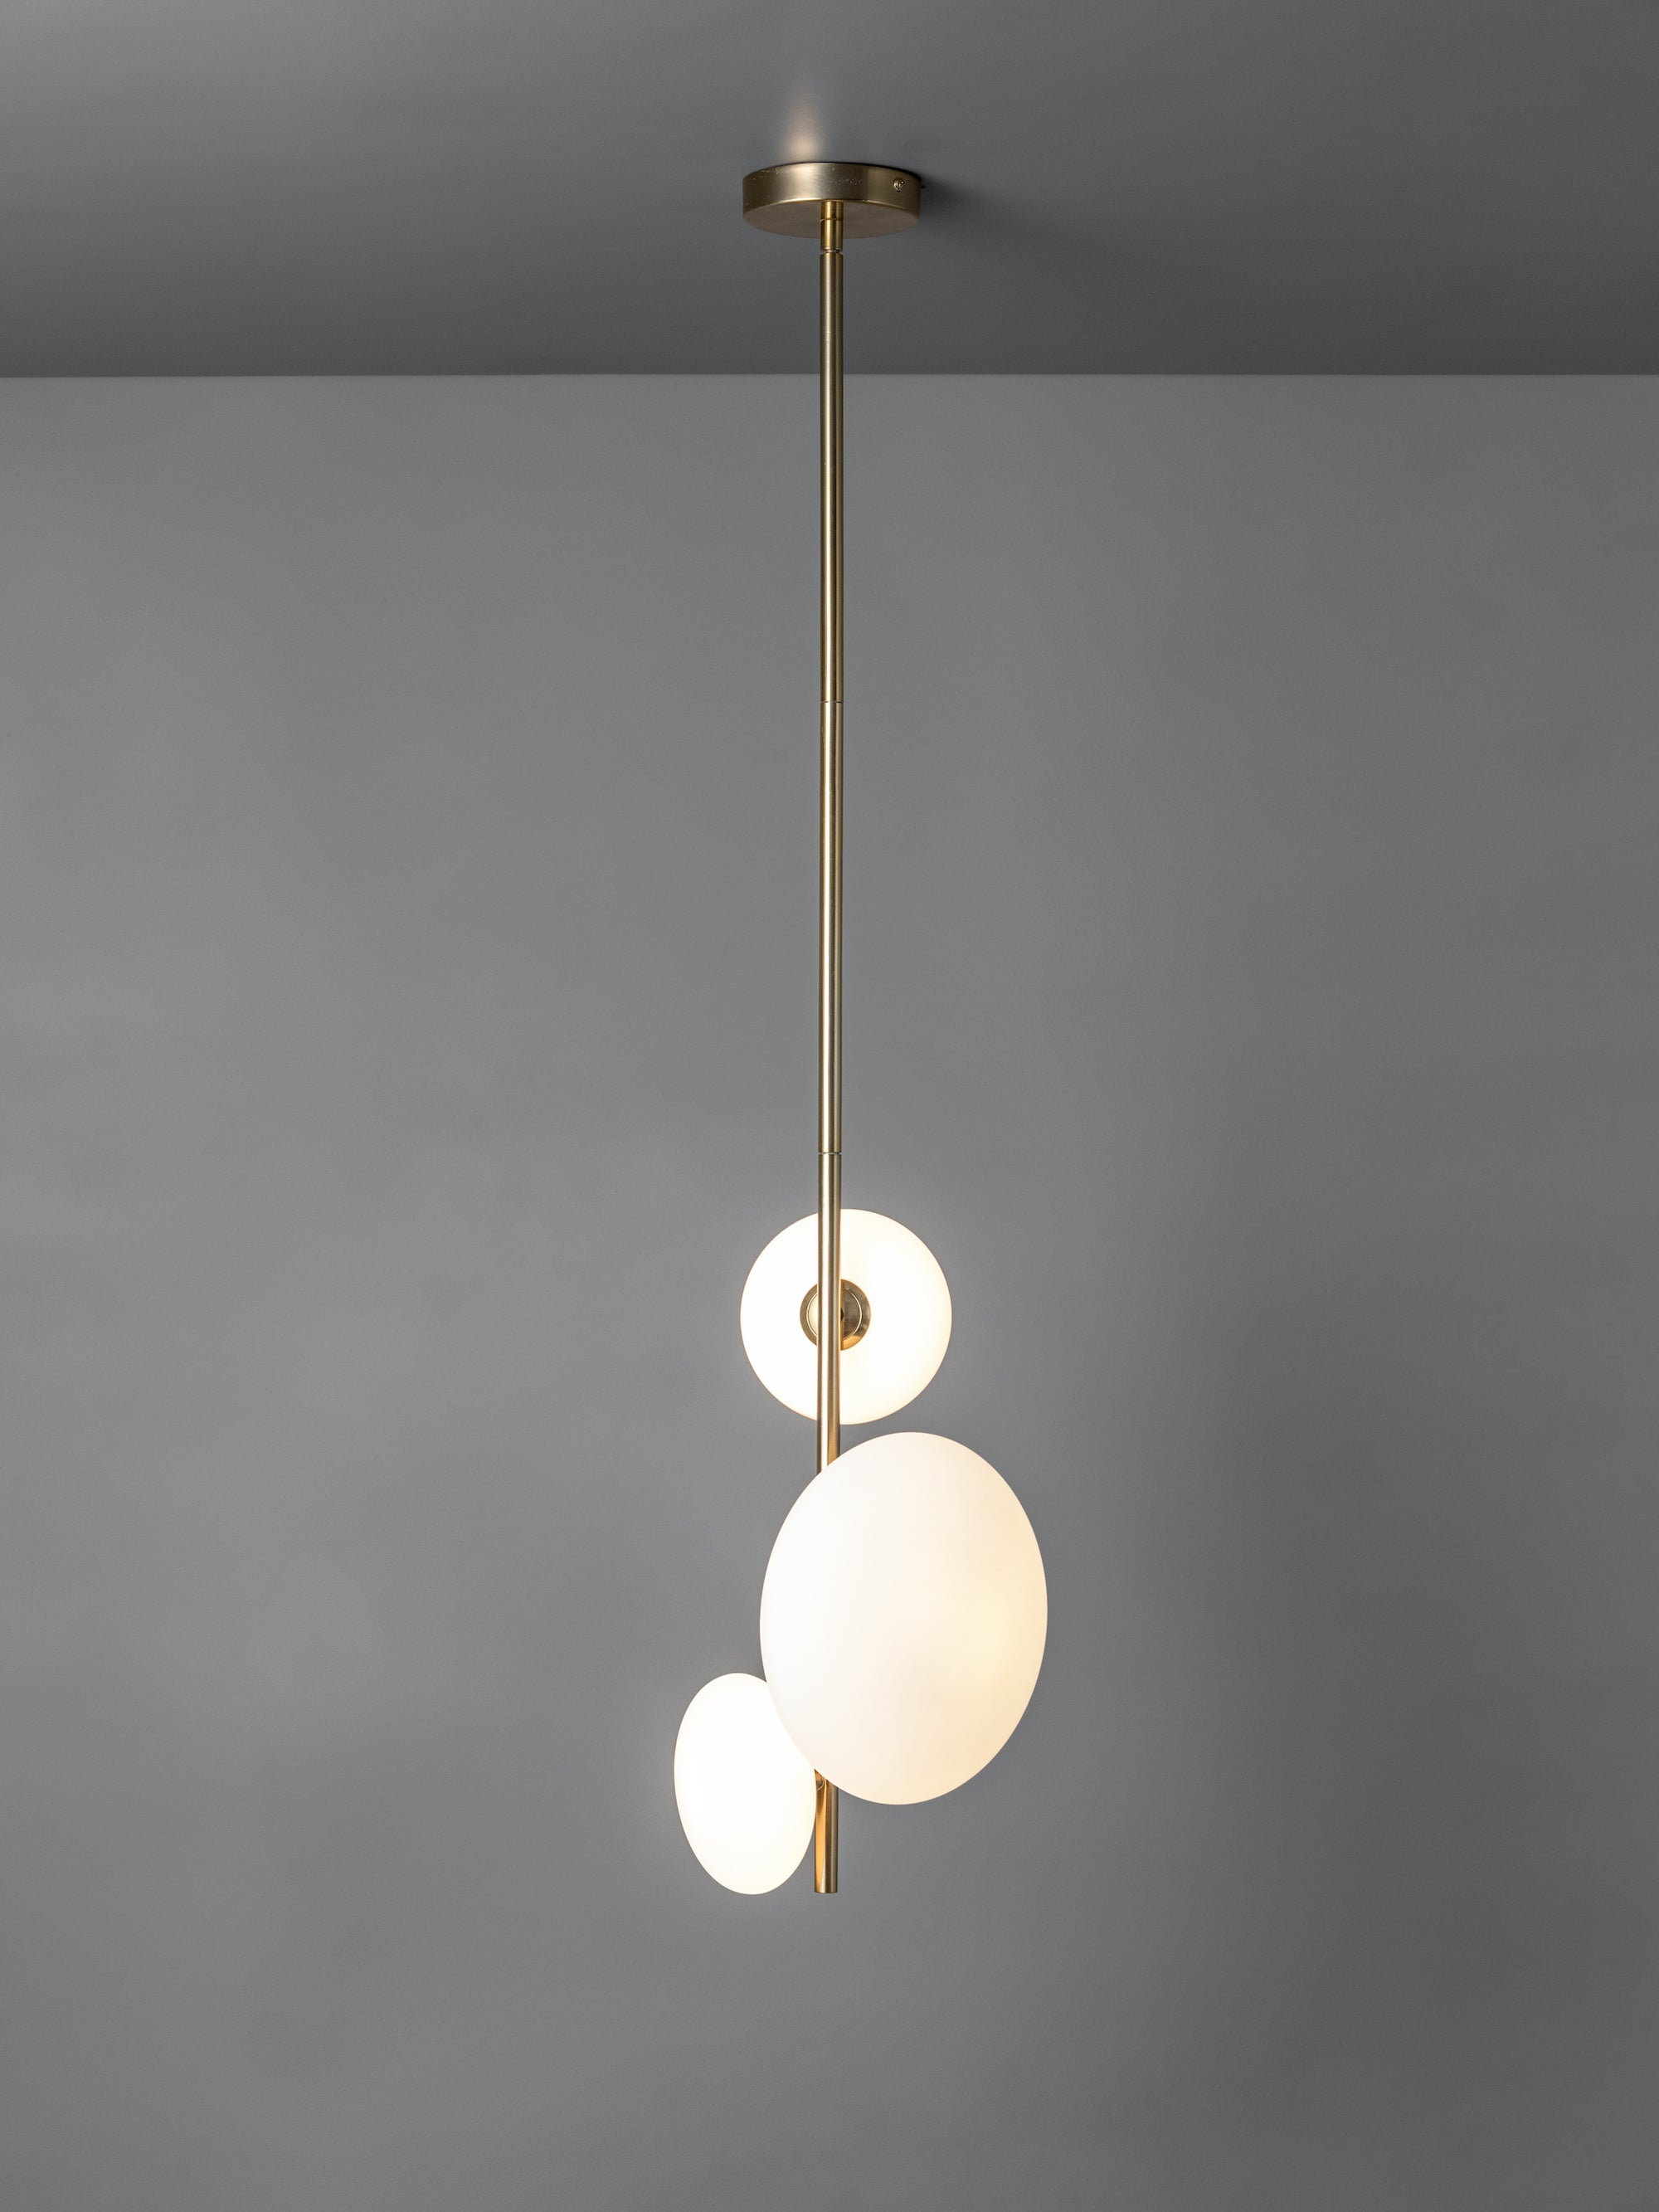 Imperial - 3 light brass and opal pendant | Ceiling Light | Lights & Lamps Inc | Modern Affordable Designer Lighting | USA